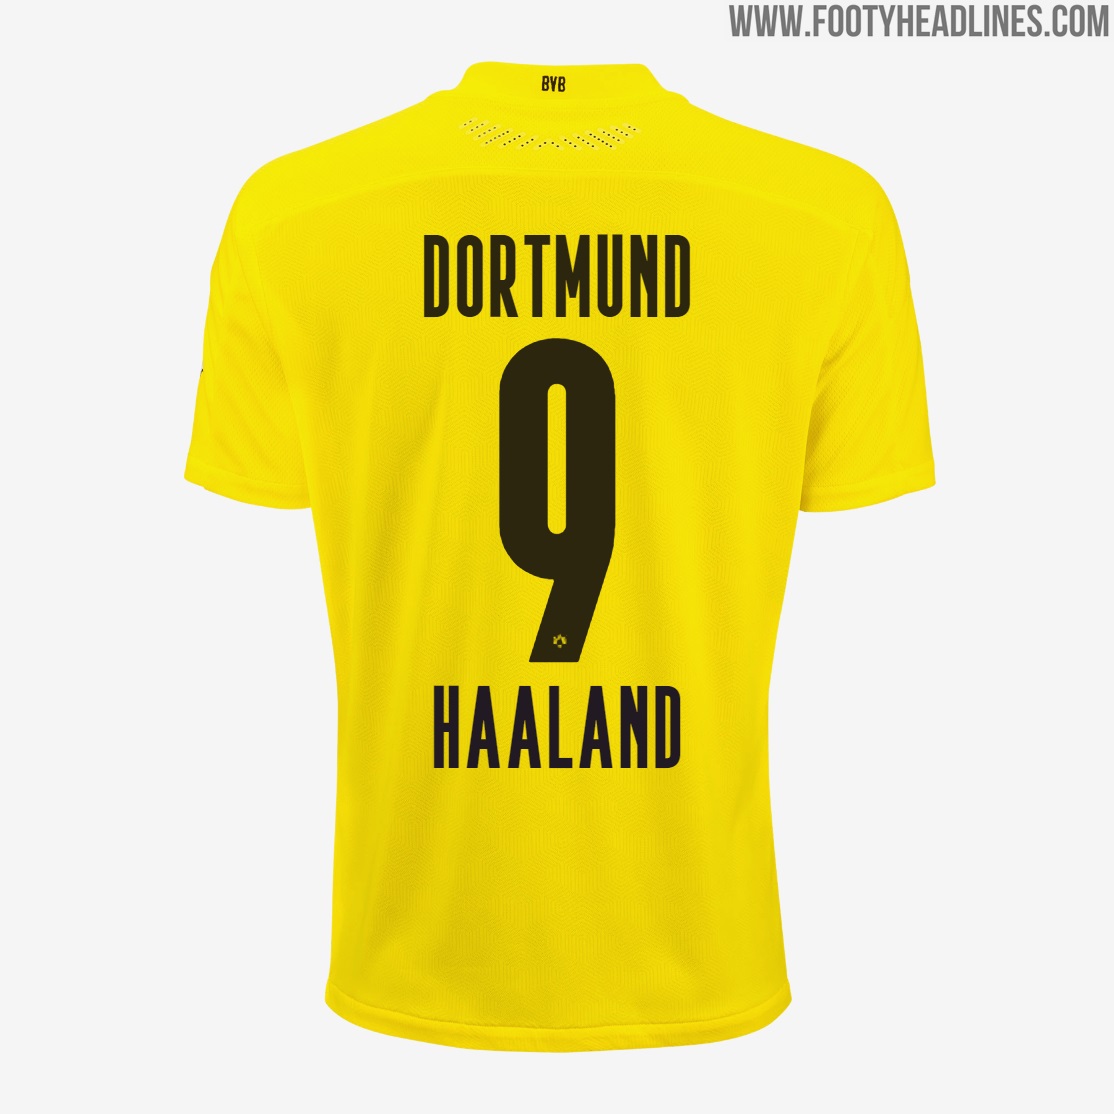 New Borussia Dortmund 20-21 Squad Numbers Announced - Haaland, Emre Can ...